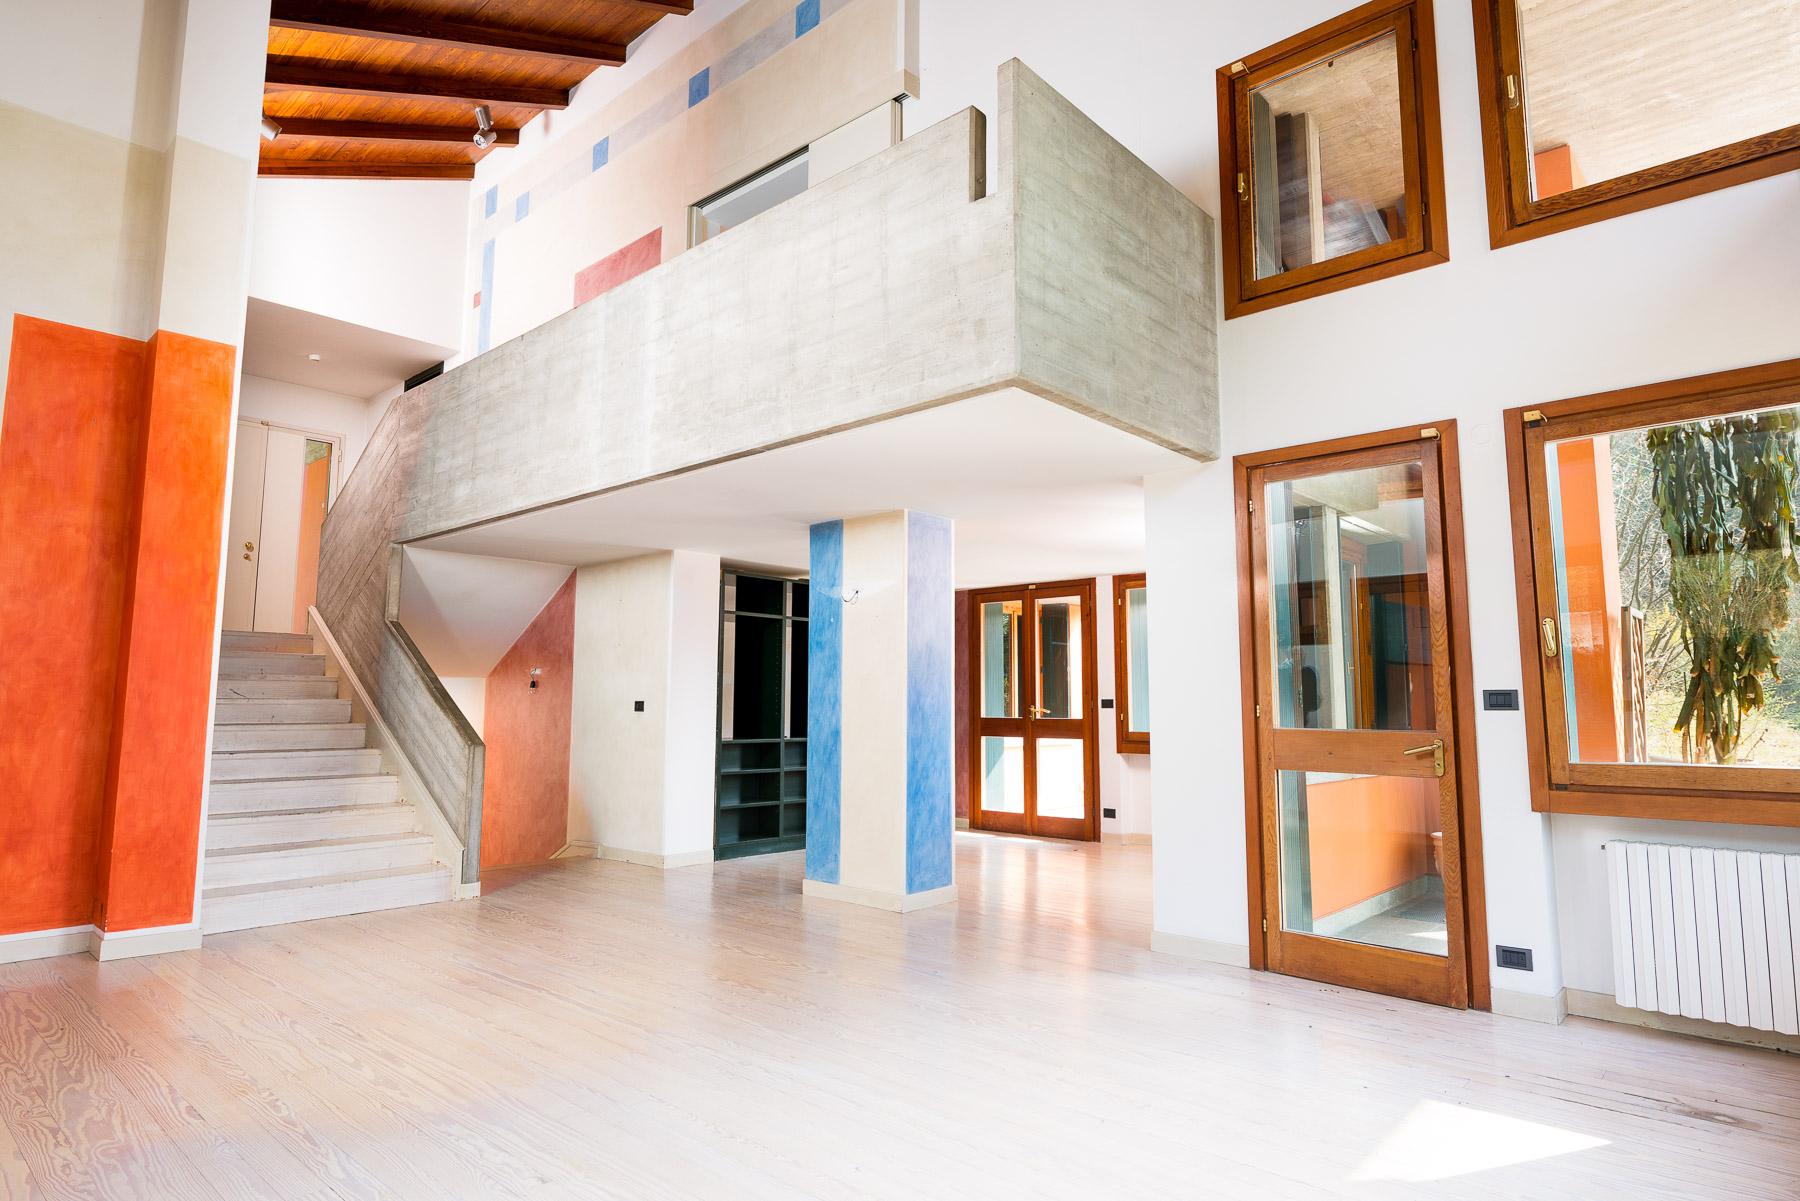 Prestigious villa inspired by Frank Lloyd Wright - 5